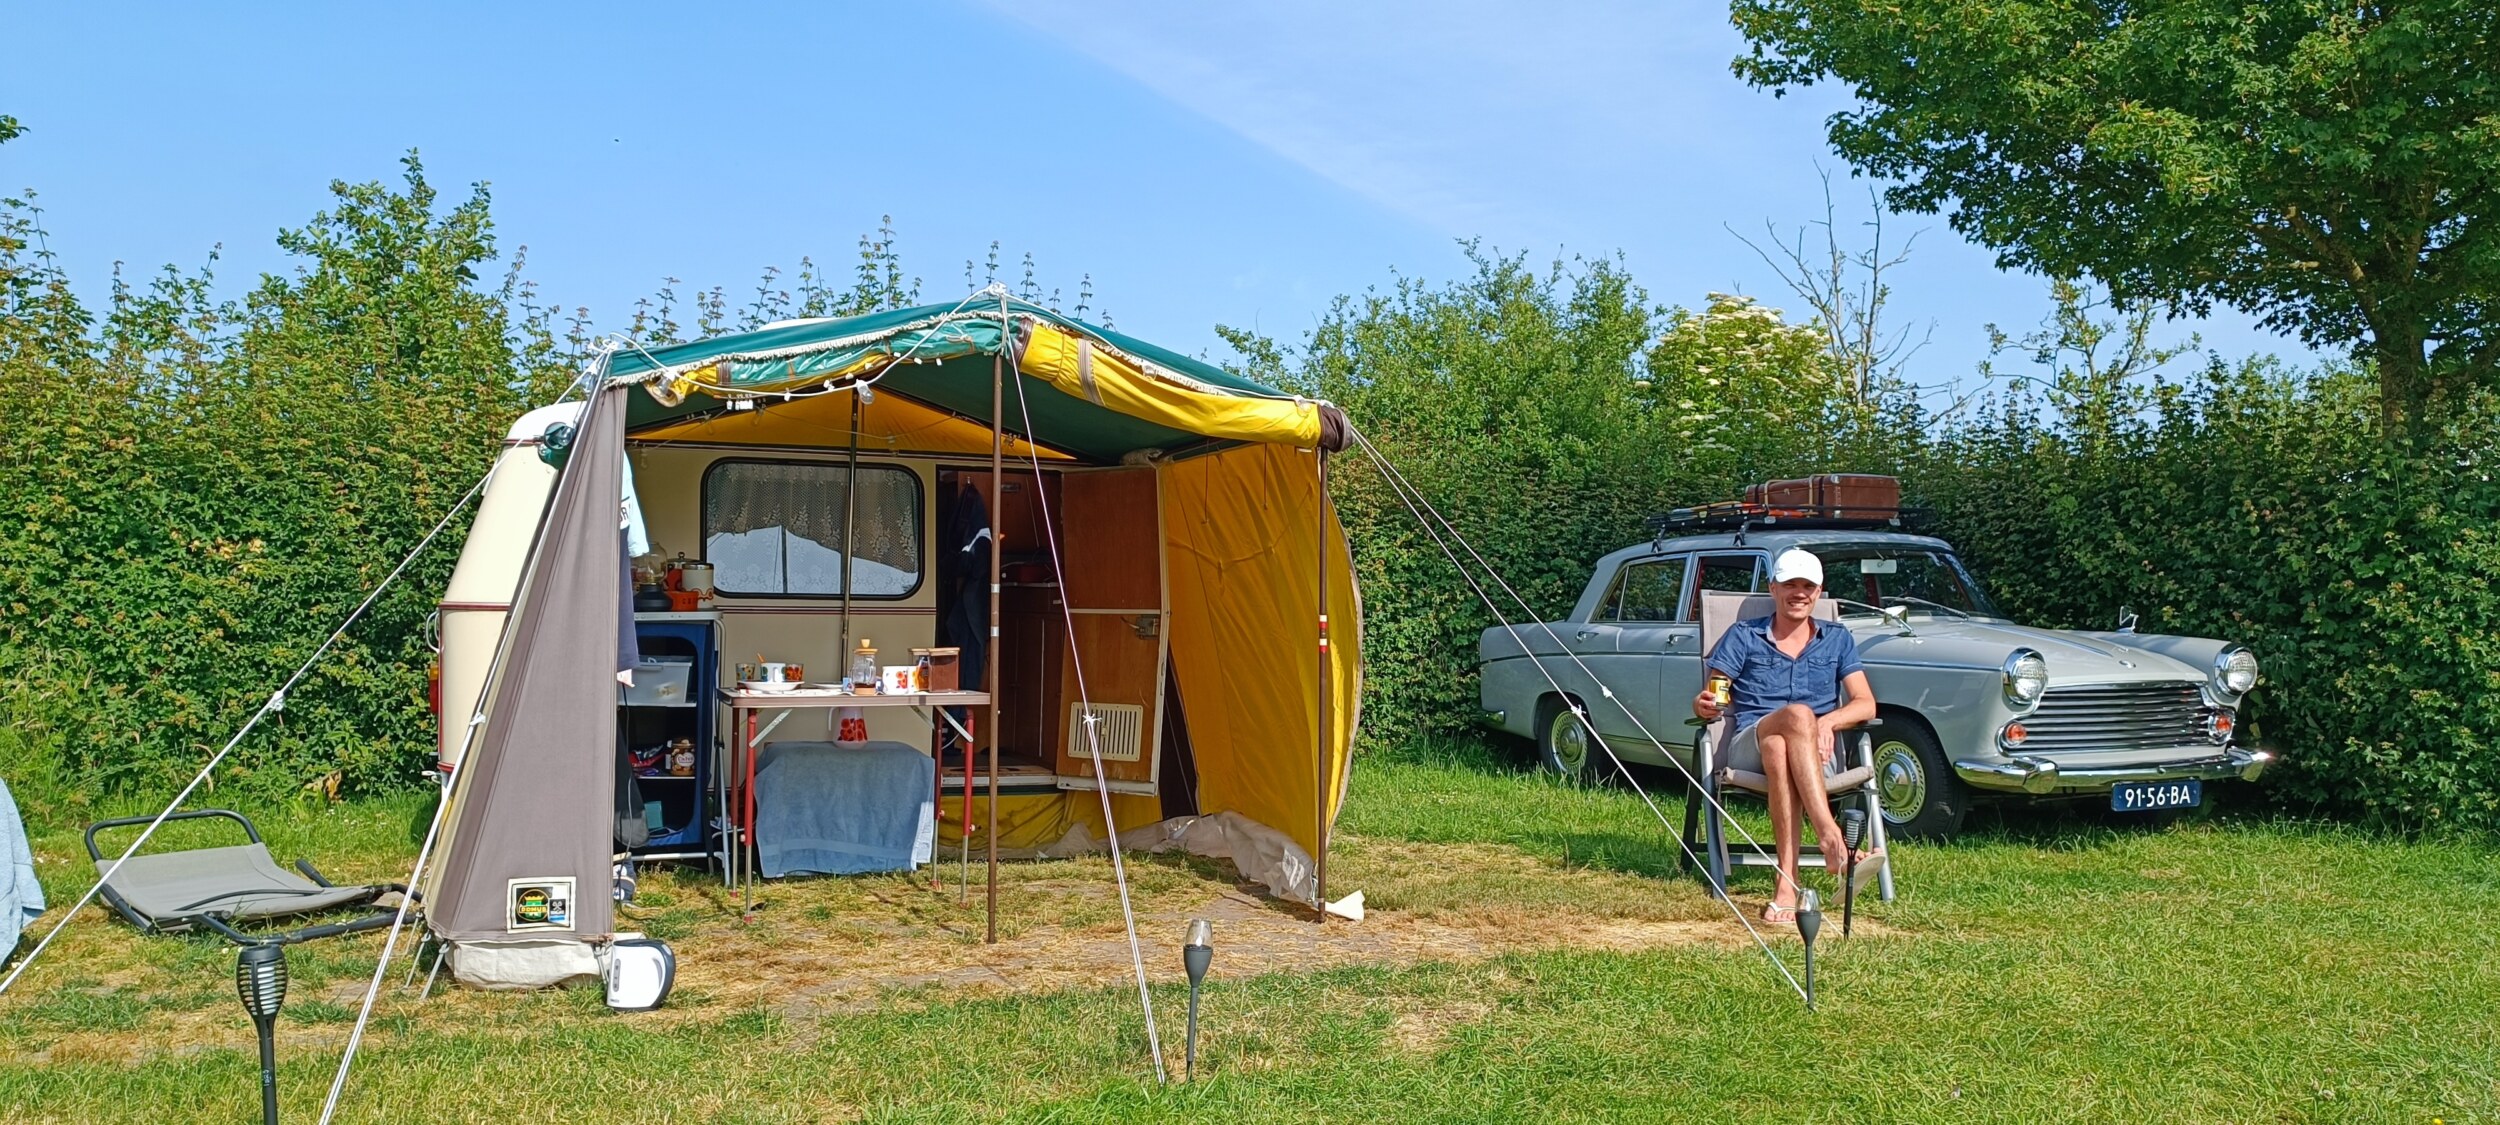 Camping in Friesland aan het water